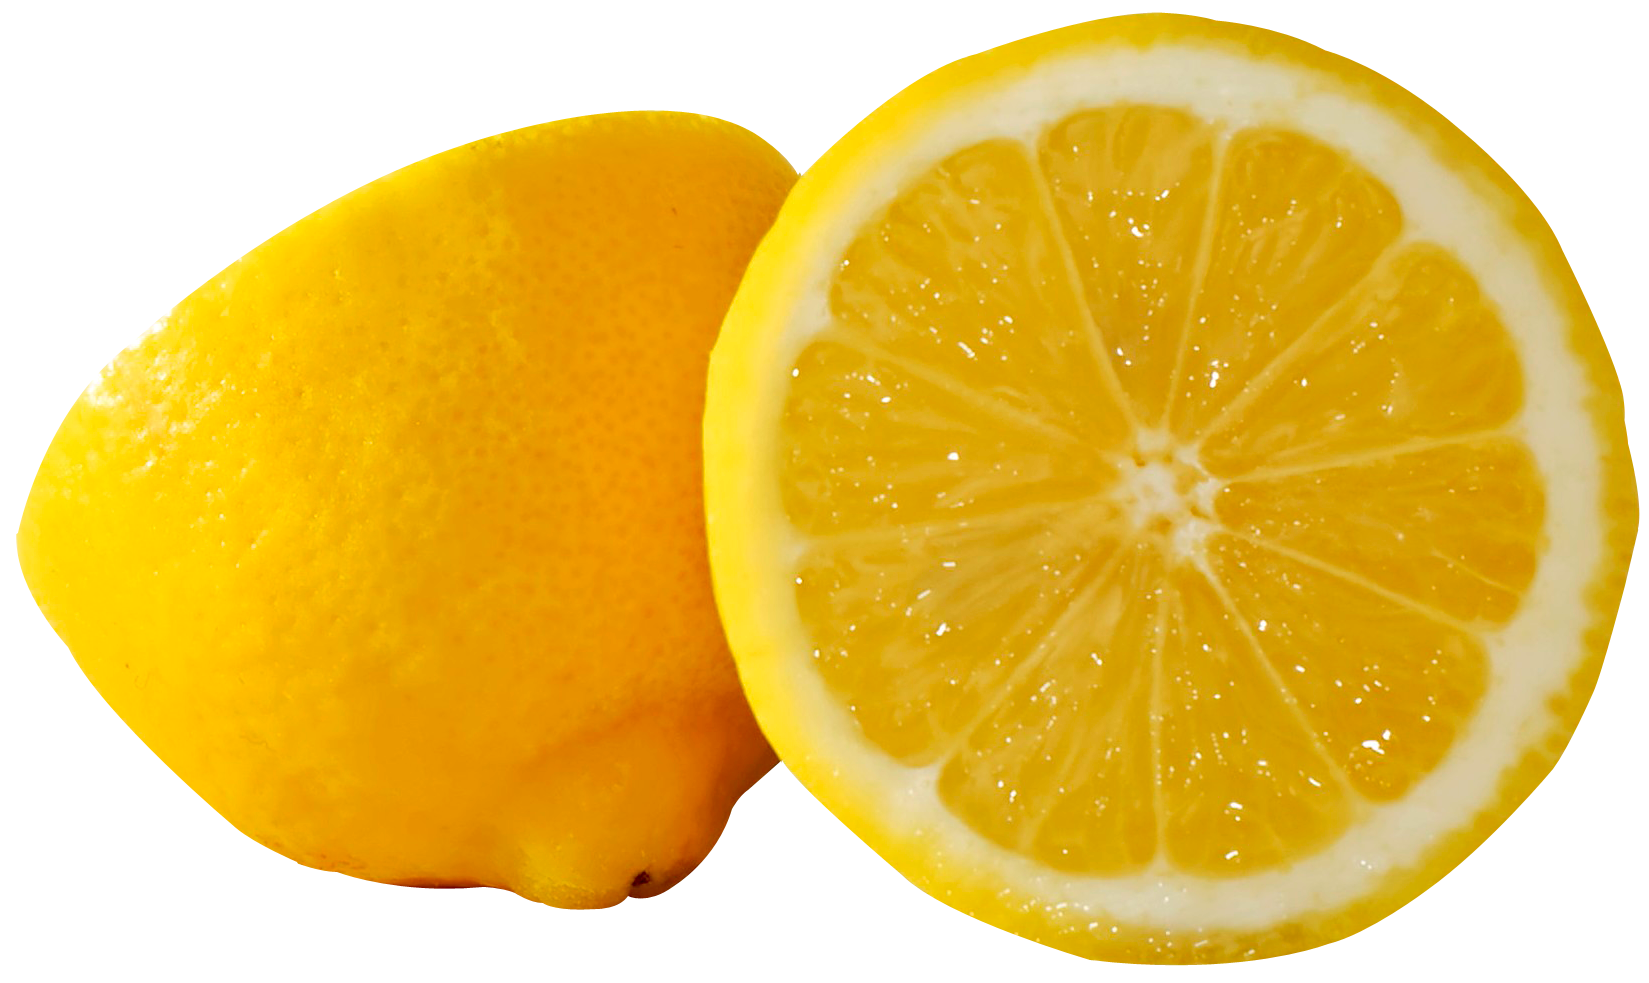 PNG File Name: Lemon PlusPng.